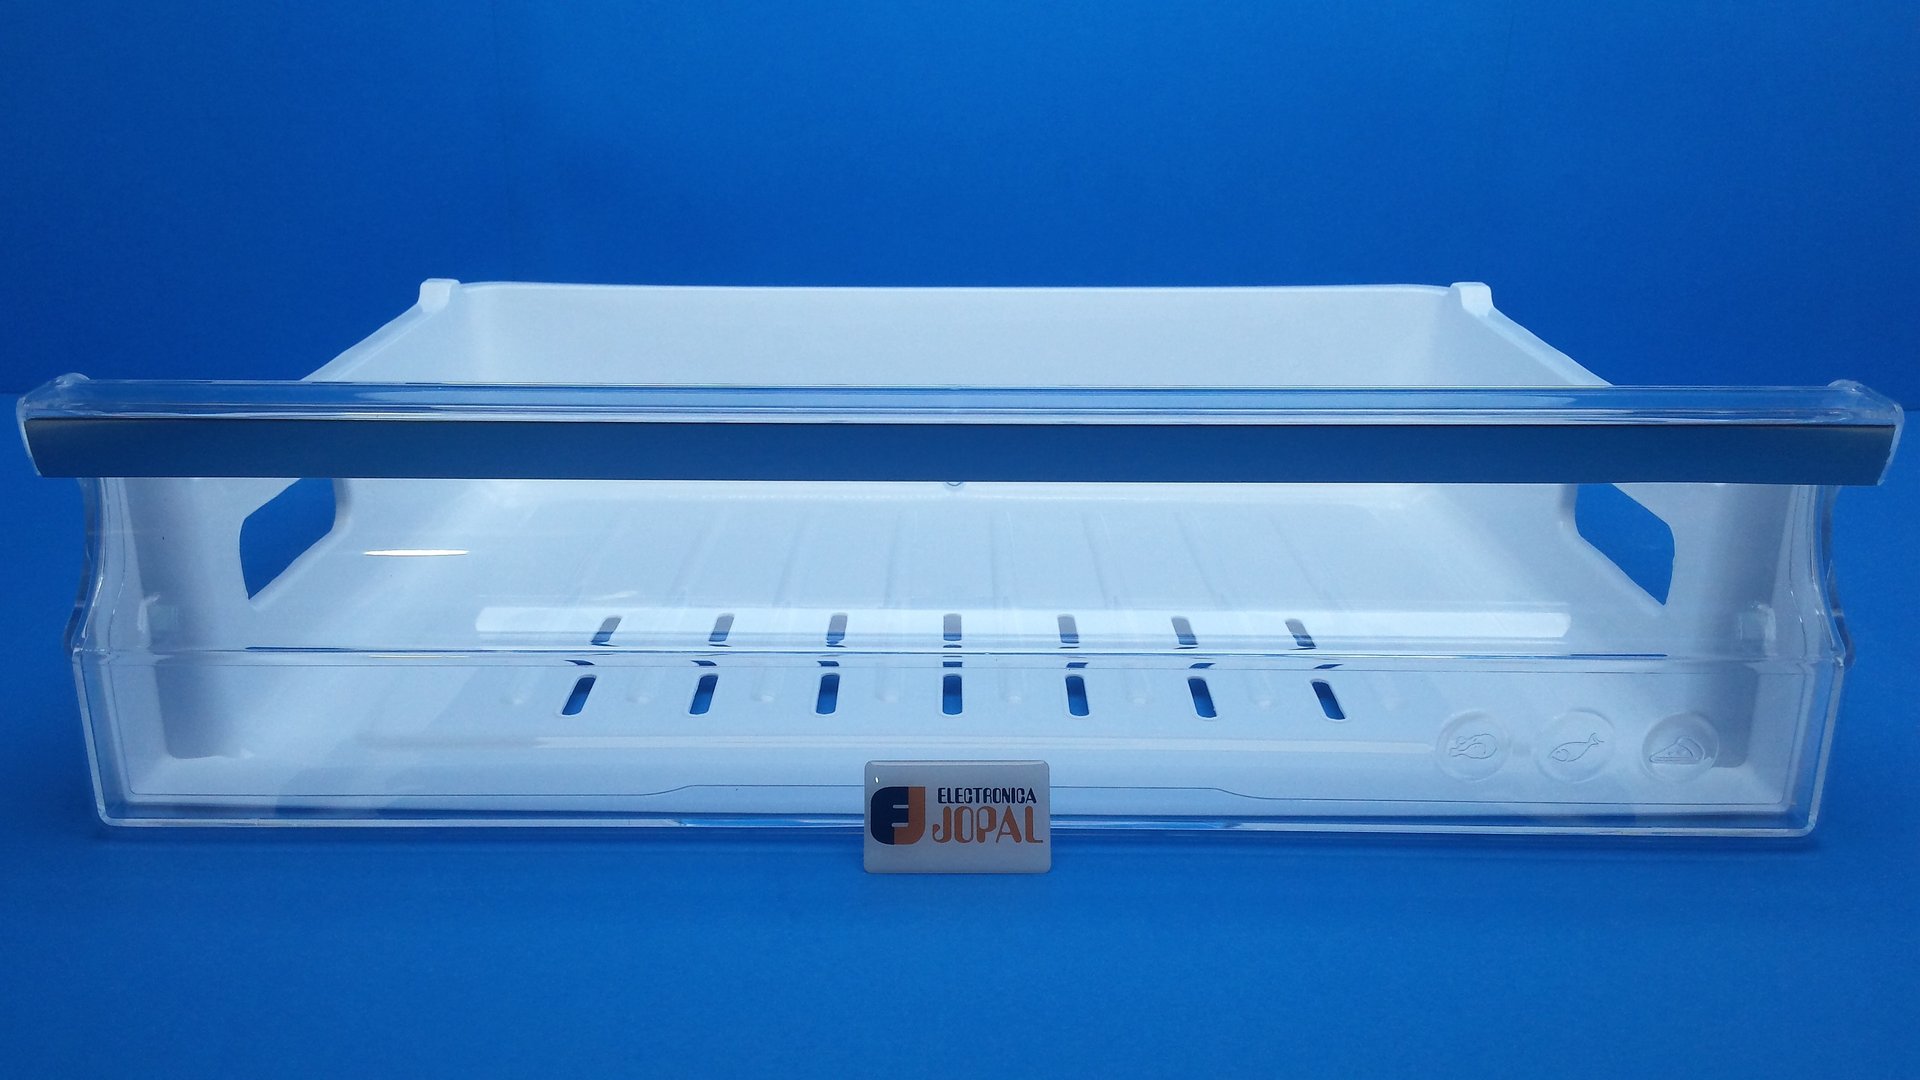 Cajón frigorífico Samsung - electronicajopal.com